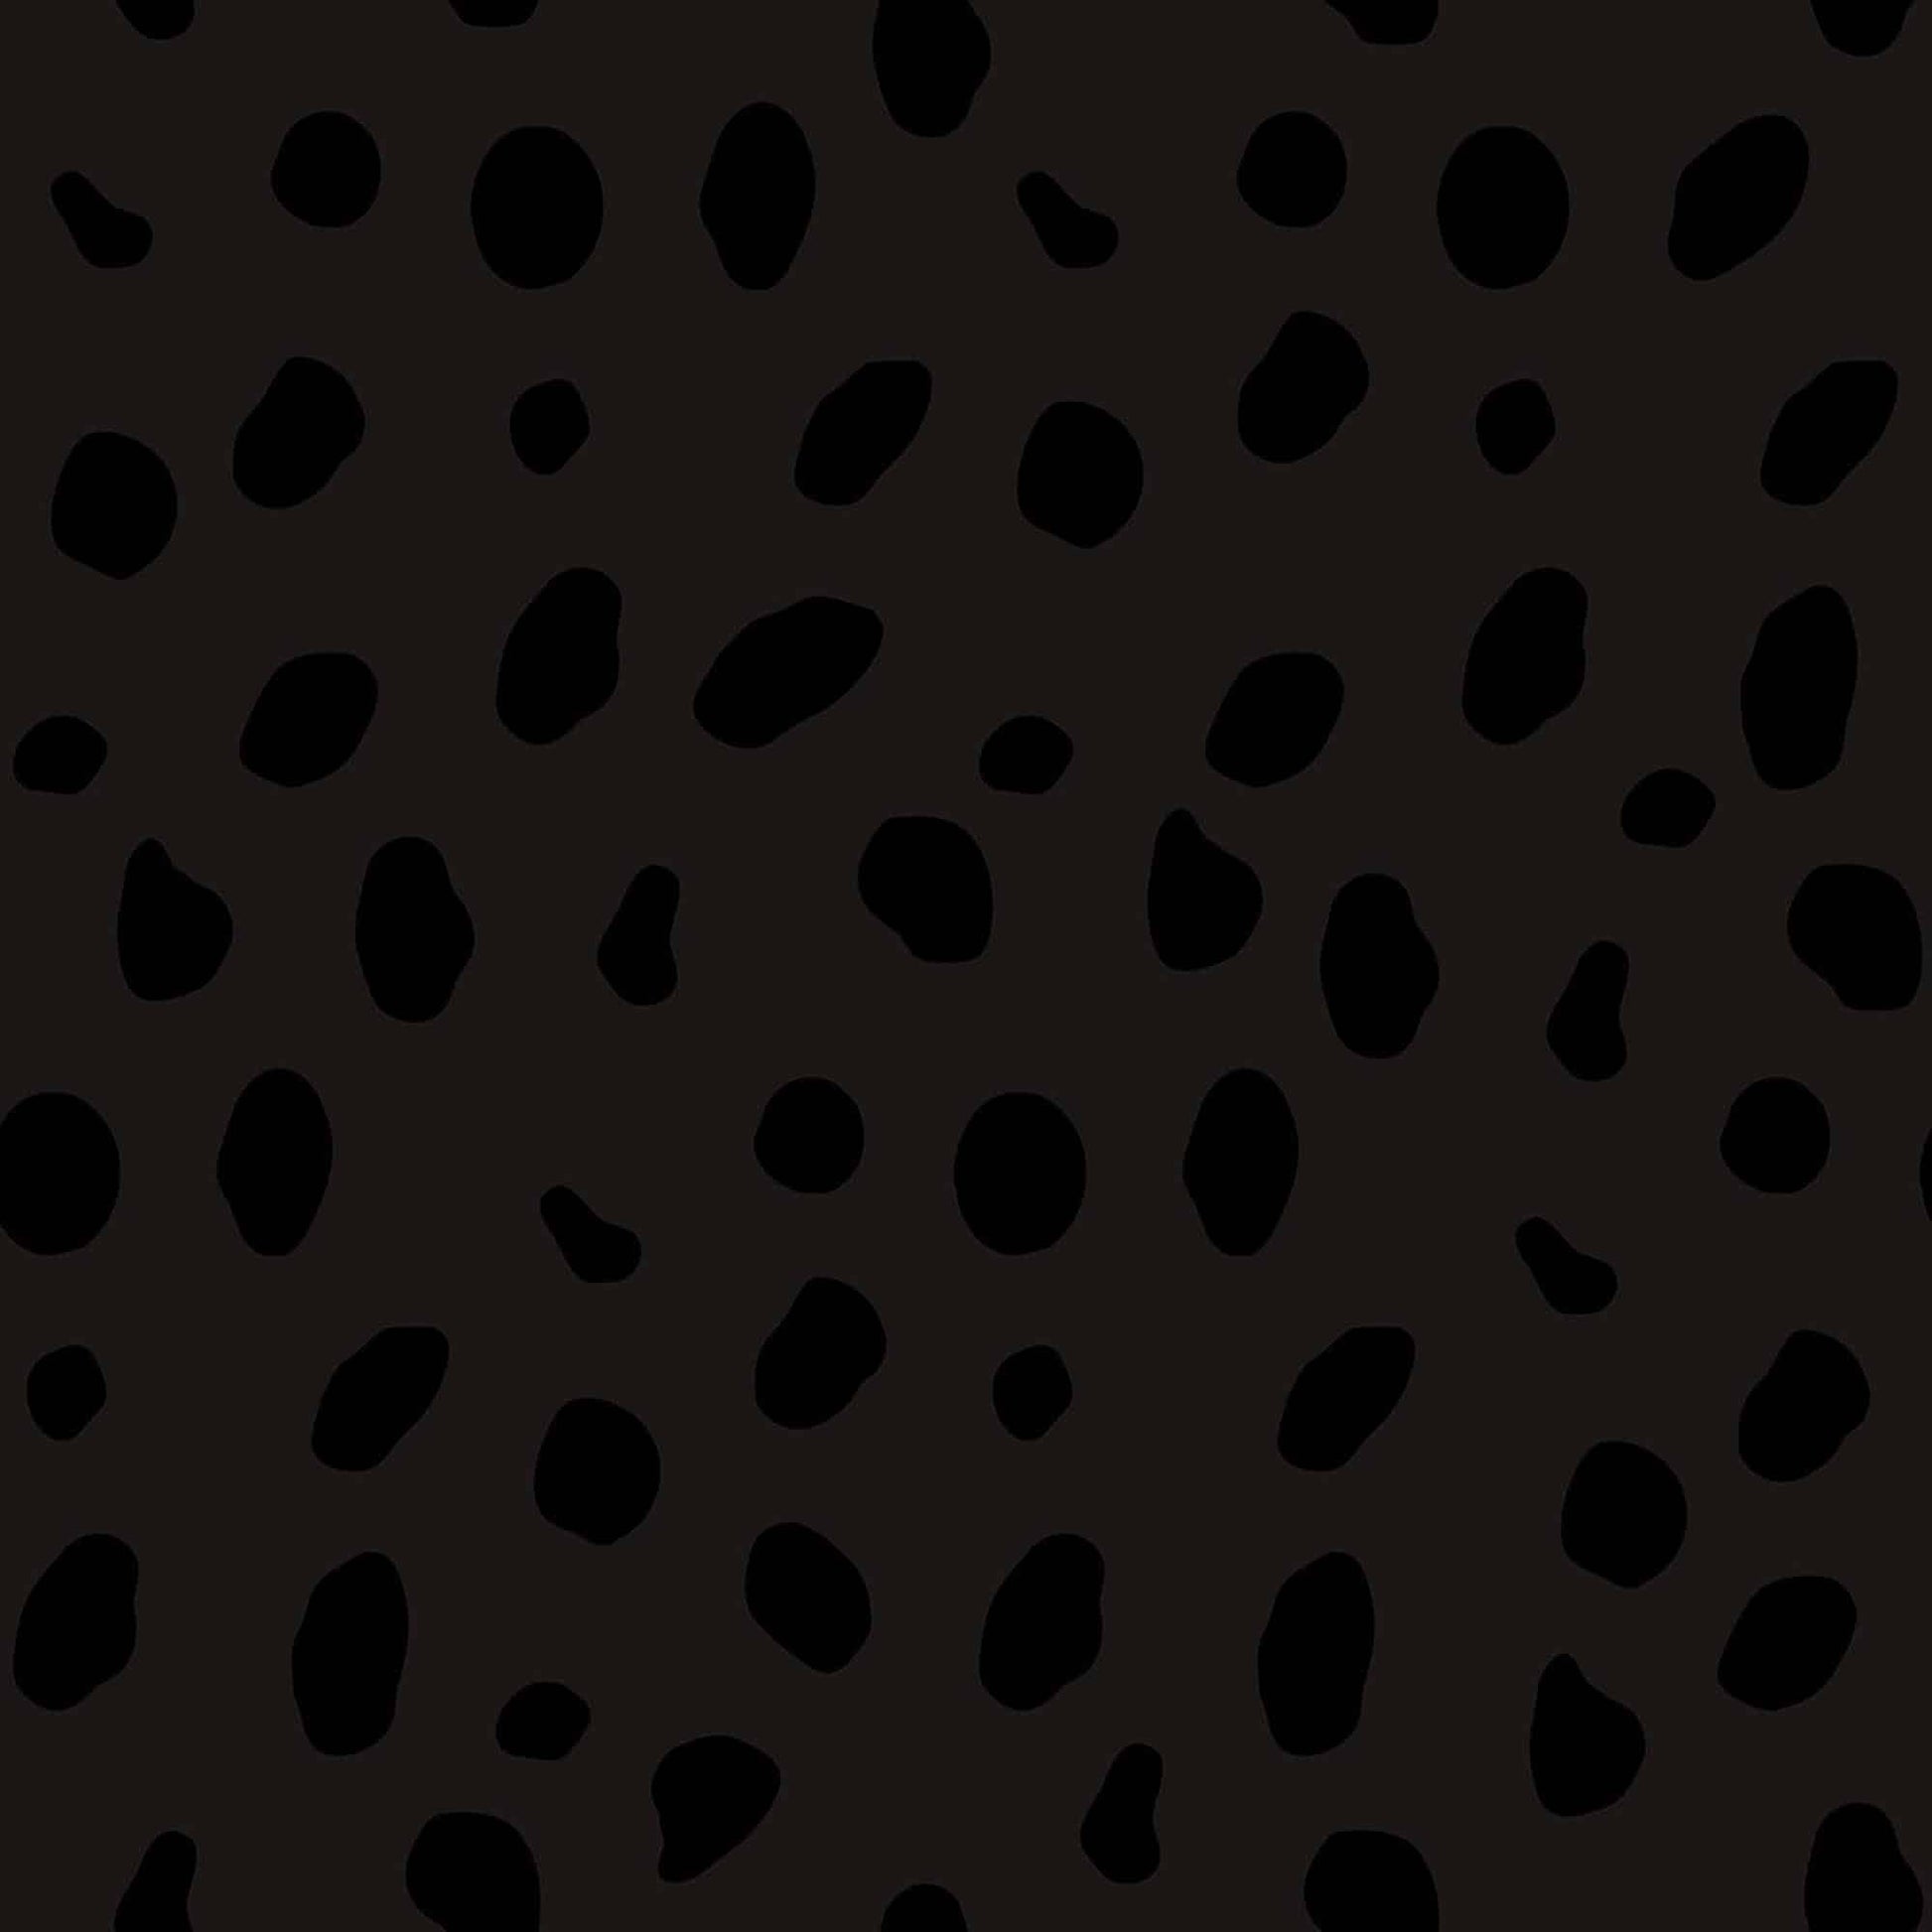 443-62509, Sassy Black Cheetah Print Wallpaper